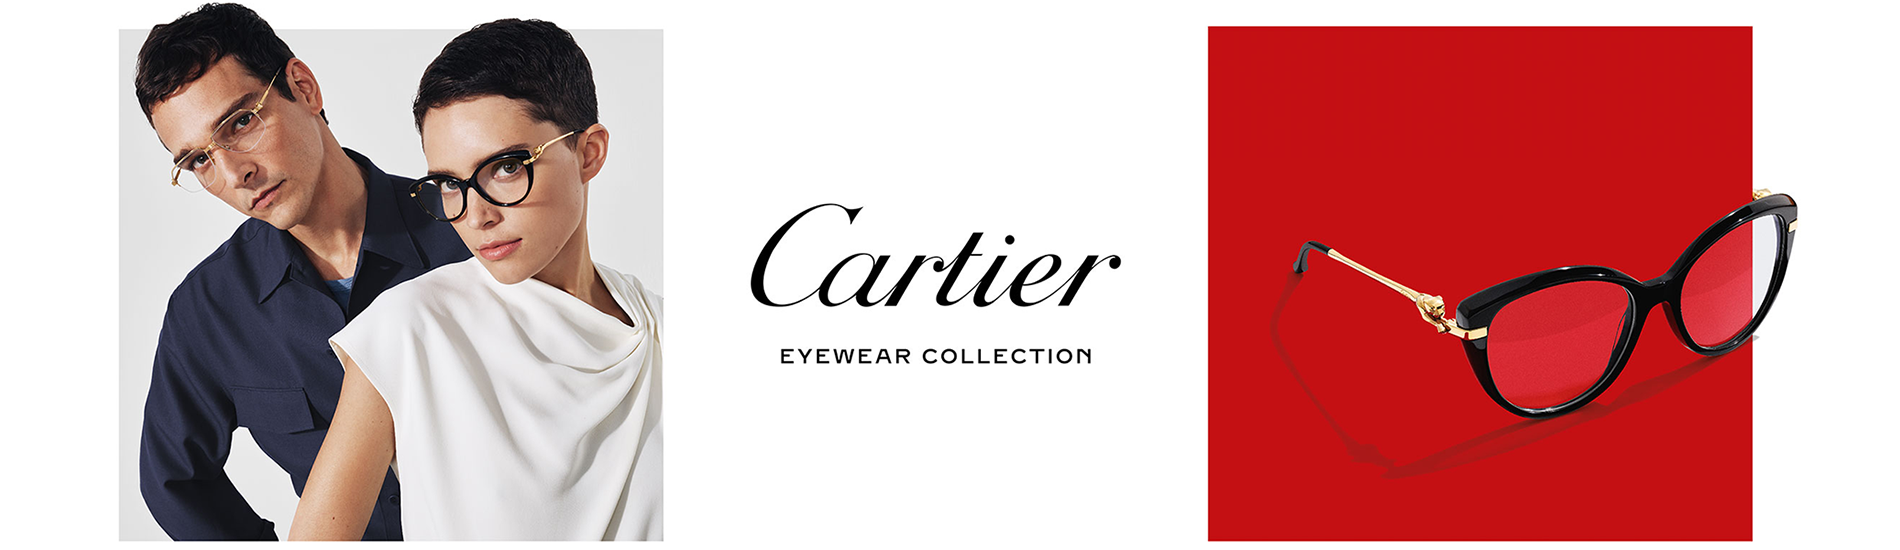 Cartier Eyewear